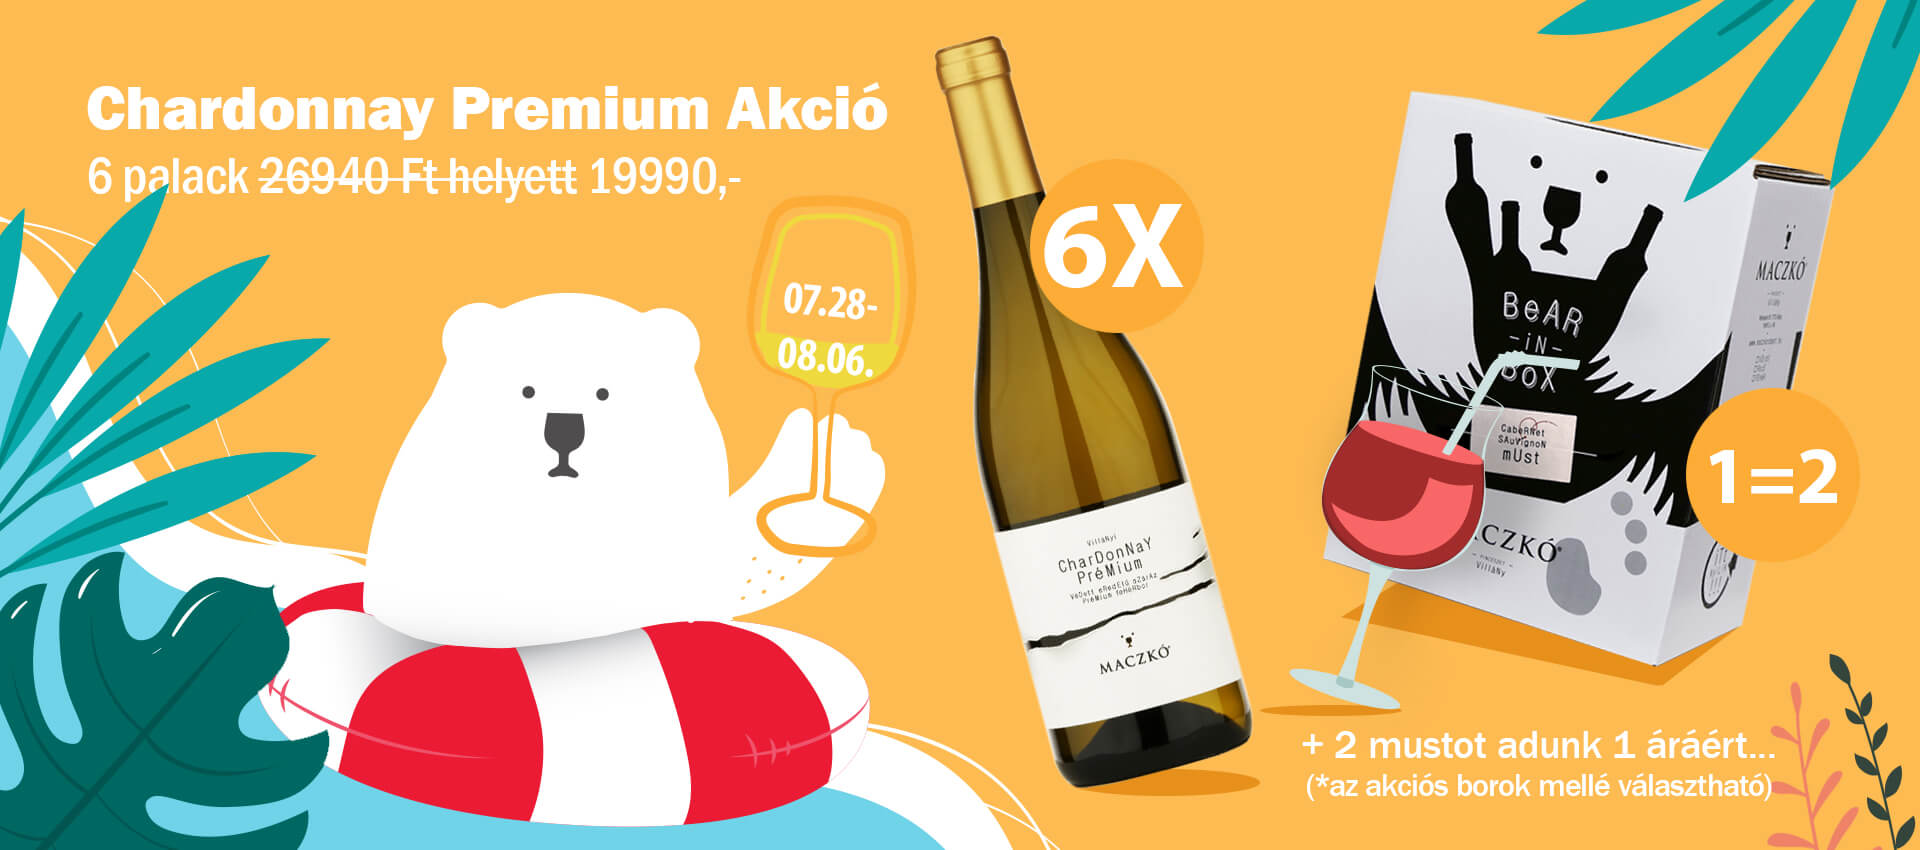 Chardonnay Premium akció